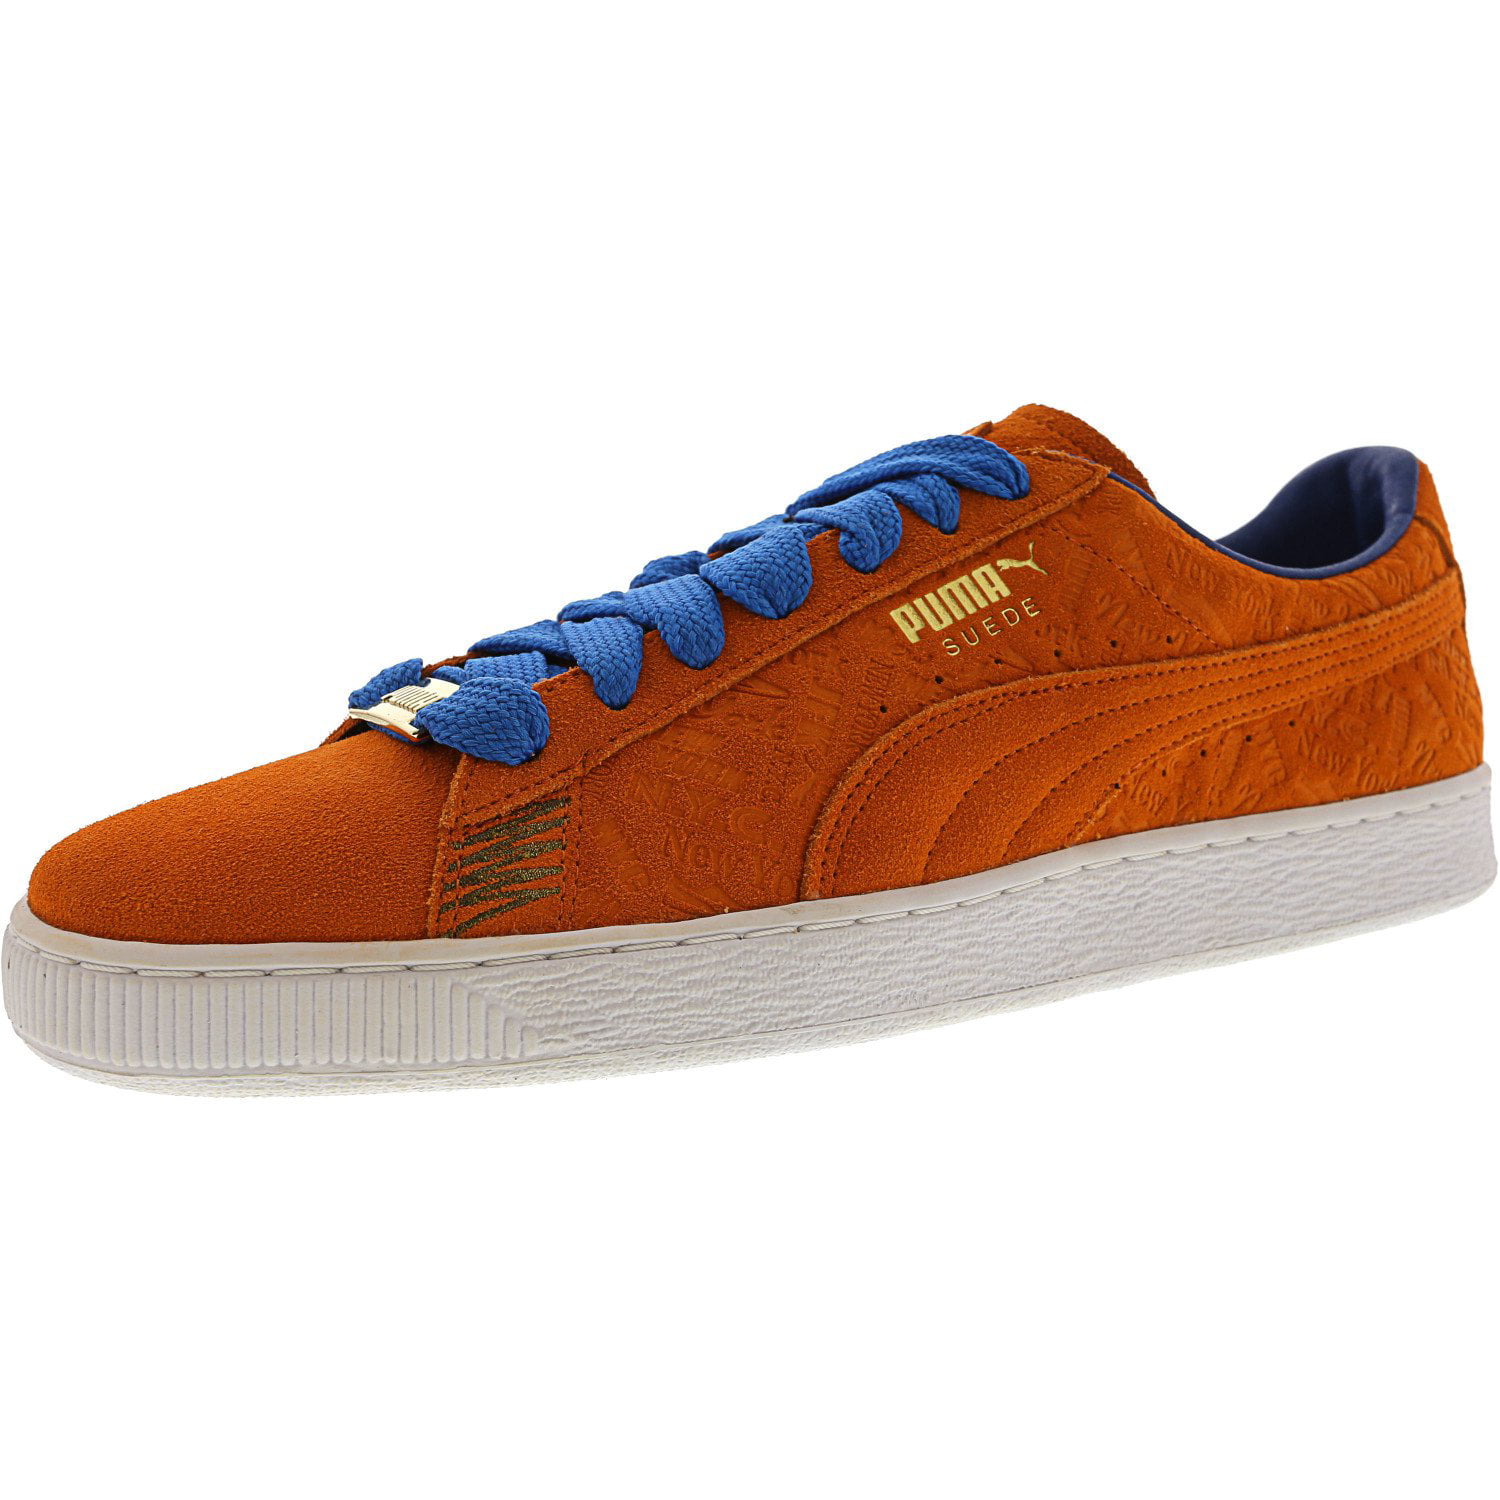 Puma Men's Suede Classic Nyc Vibrant Orange Ankle-High Fashion Sneaker ...